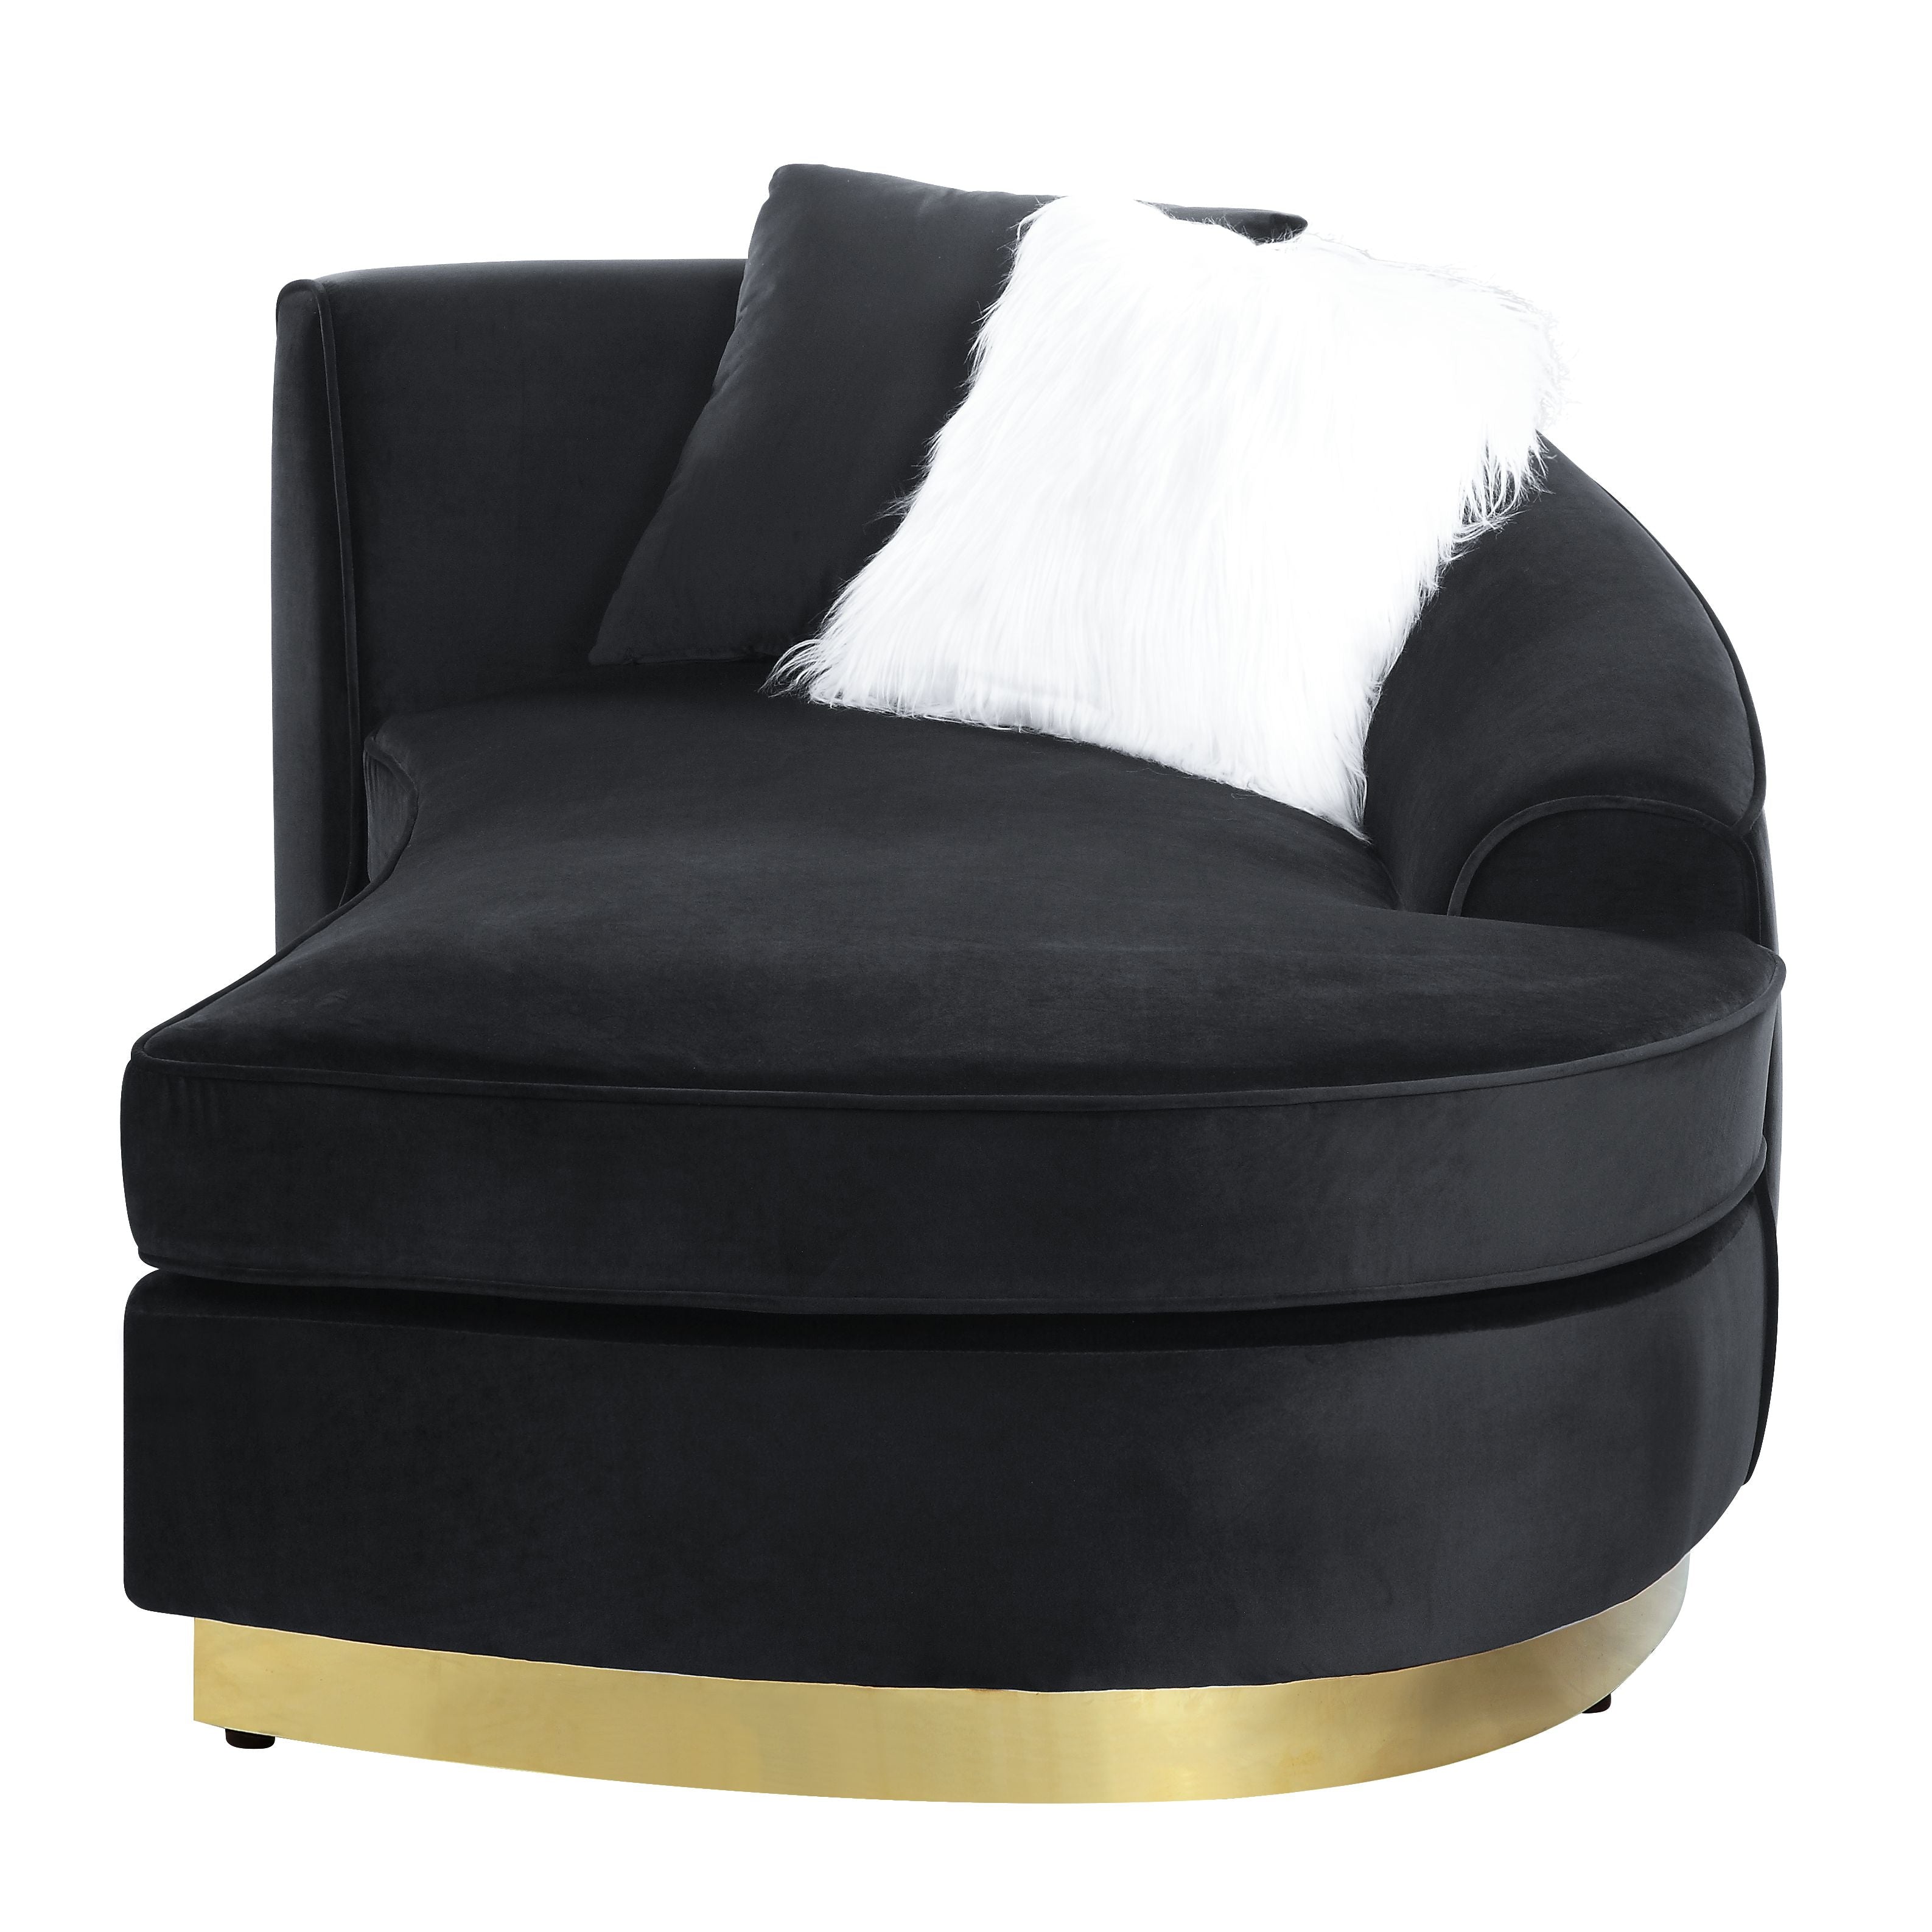 Achelle Chaise w/2 Pillows - East Shore Modern Home Furnishings